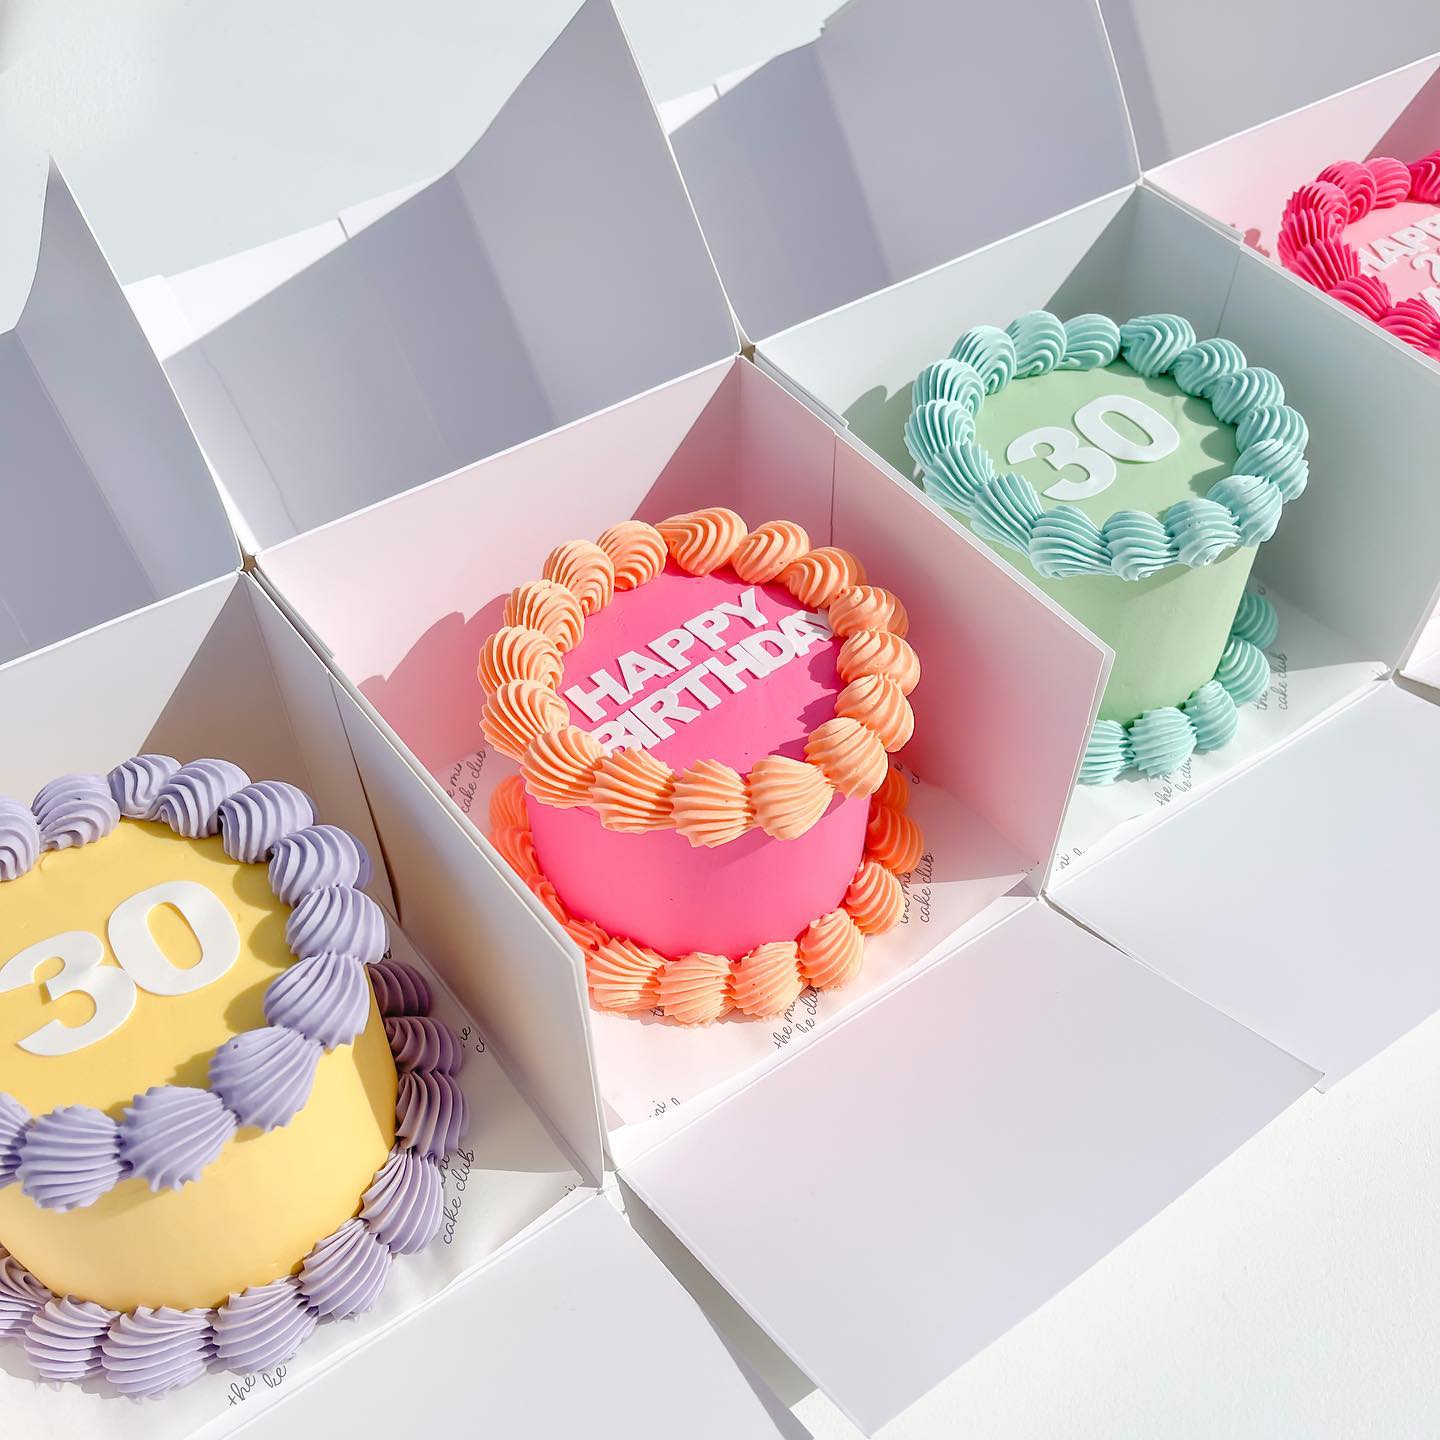 A cute 5 inch birthday cake for a... - Dove Cake Design | Facebook